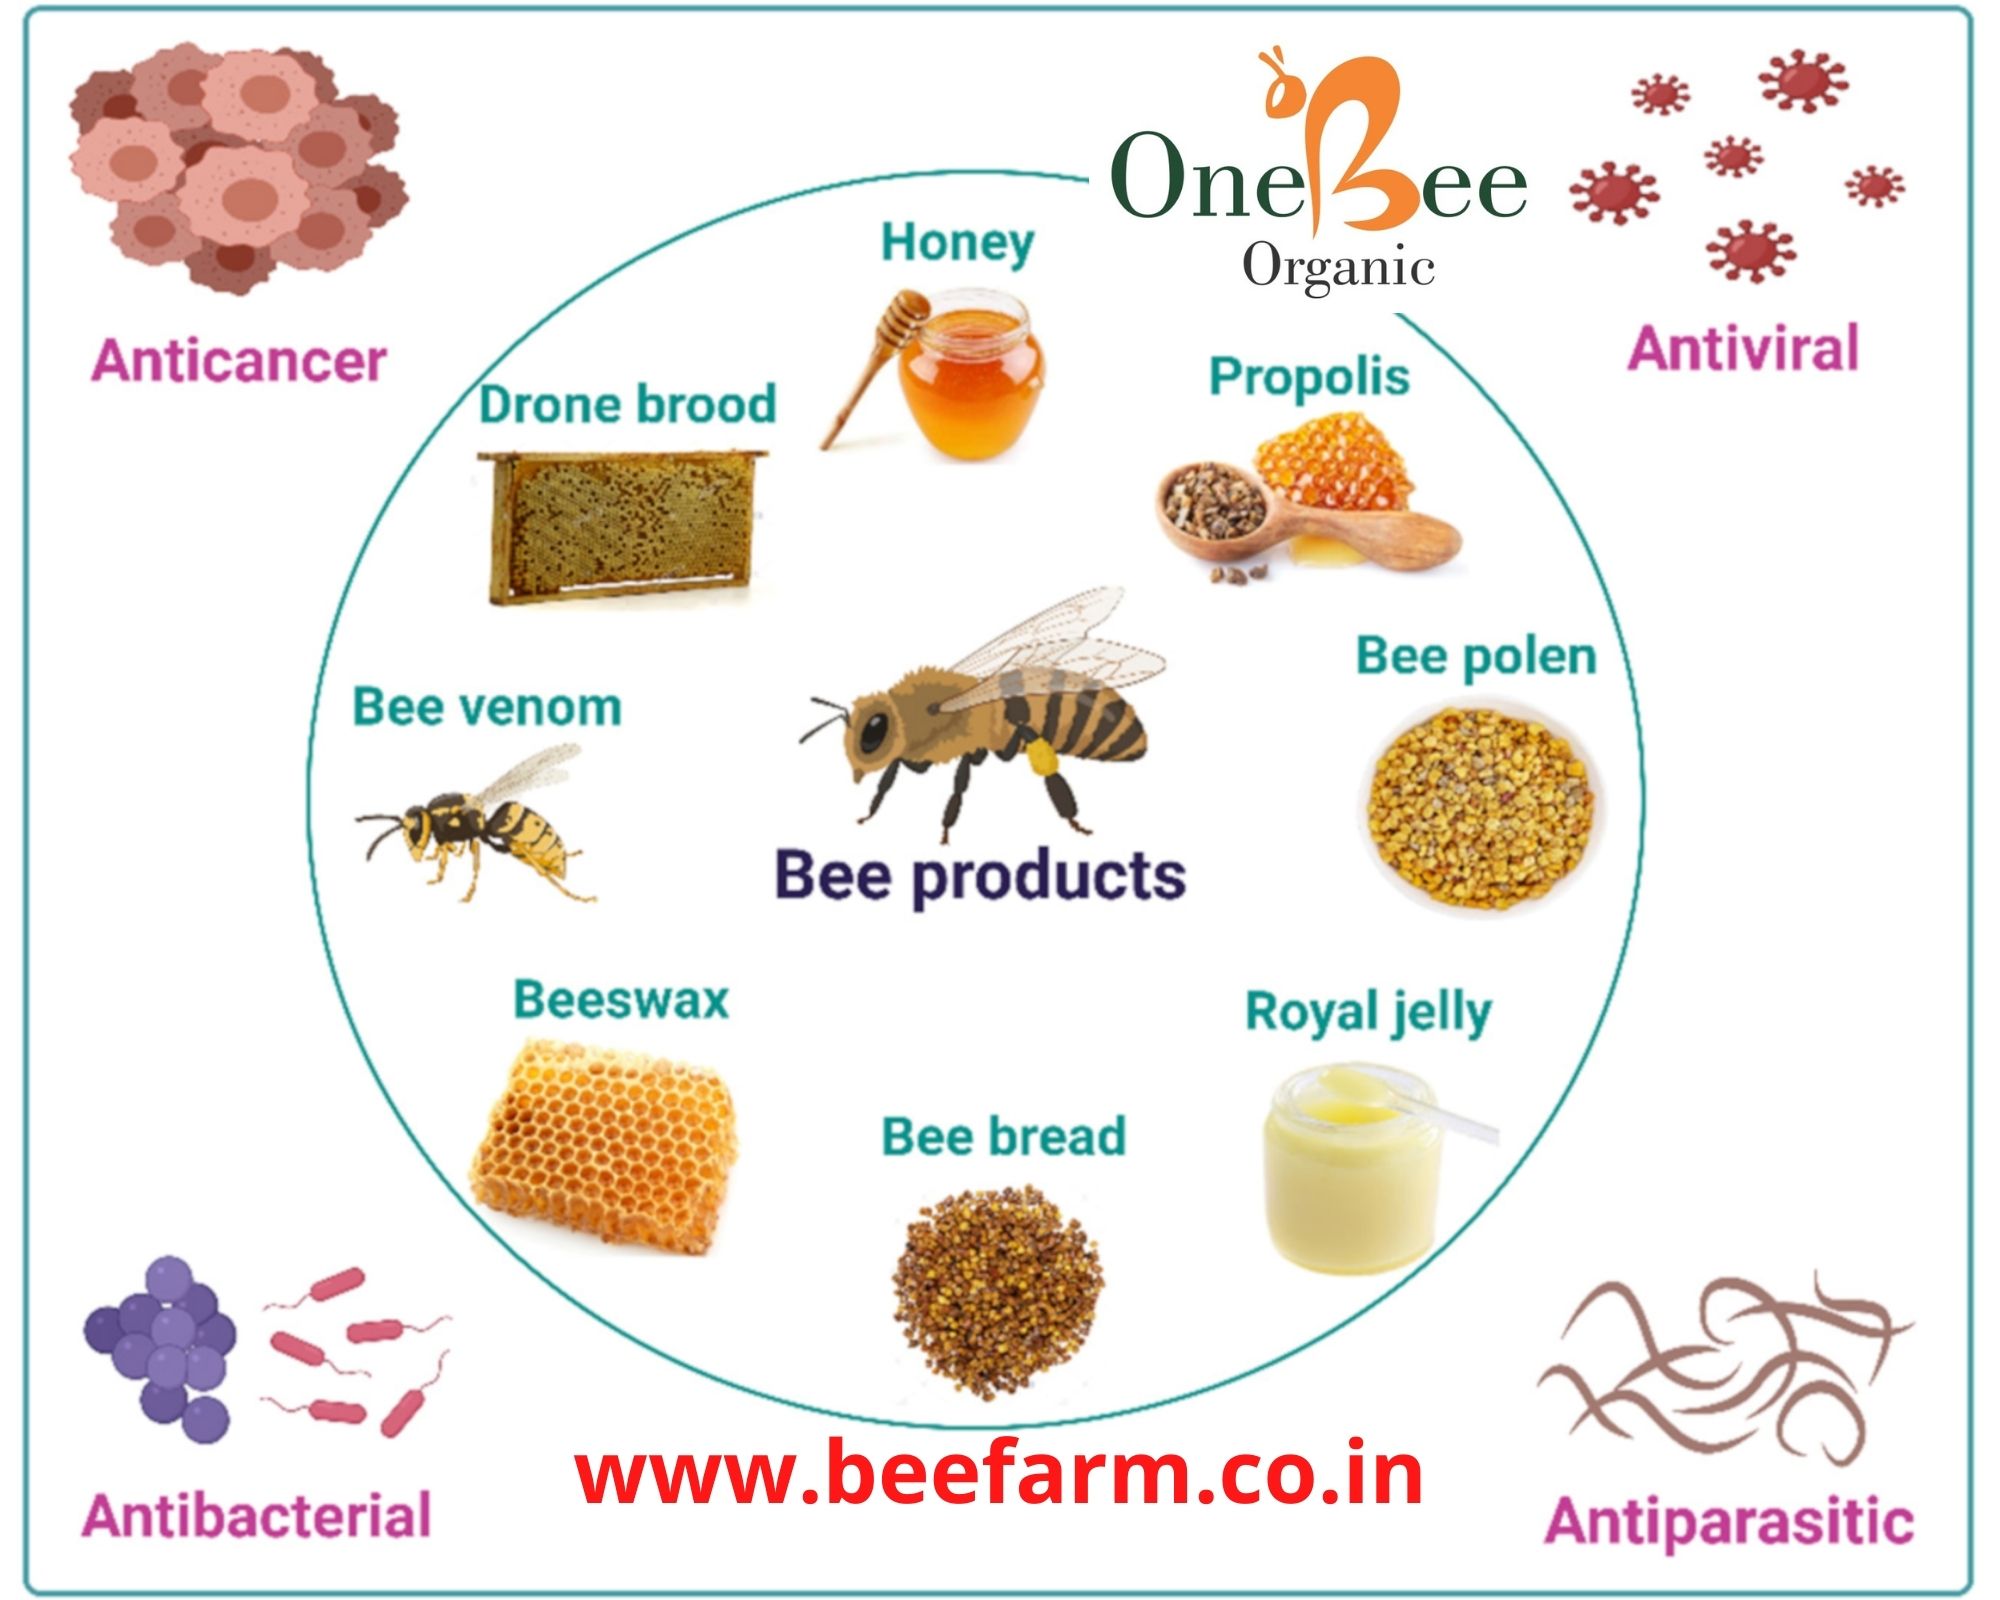 Honeybee Products